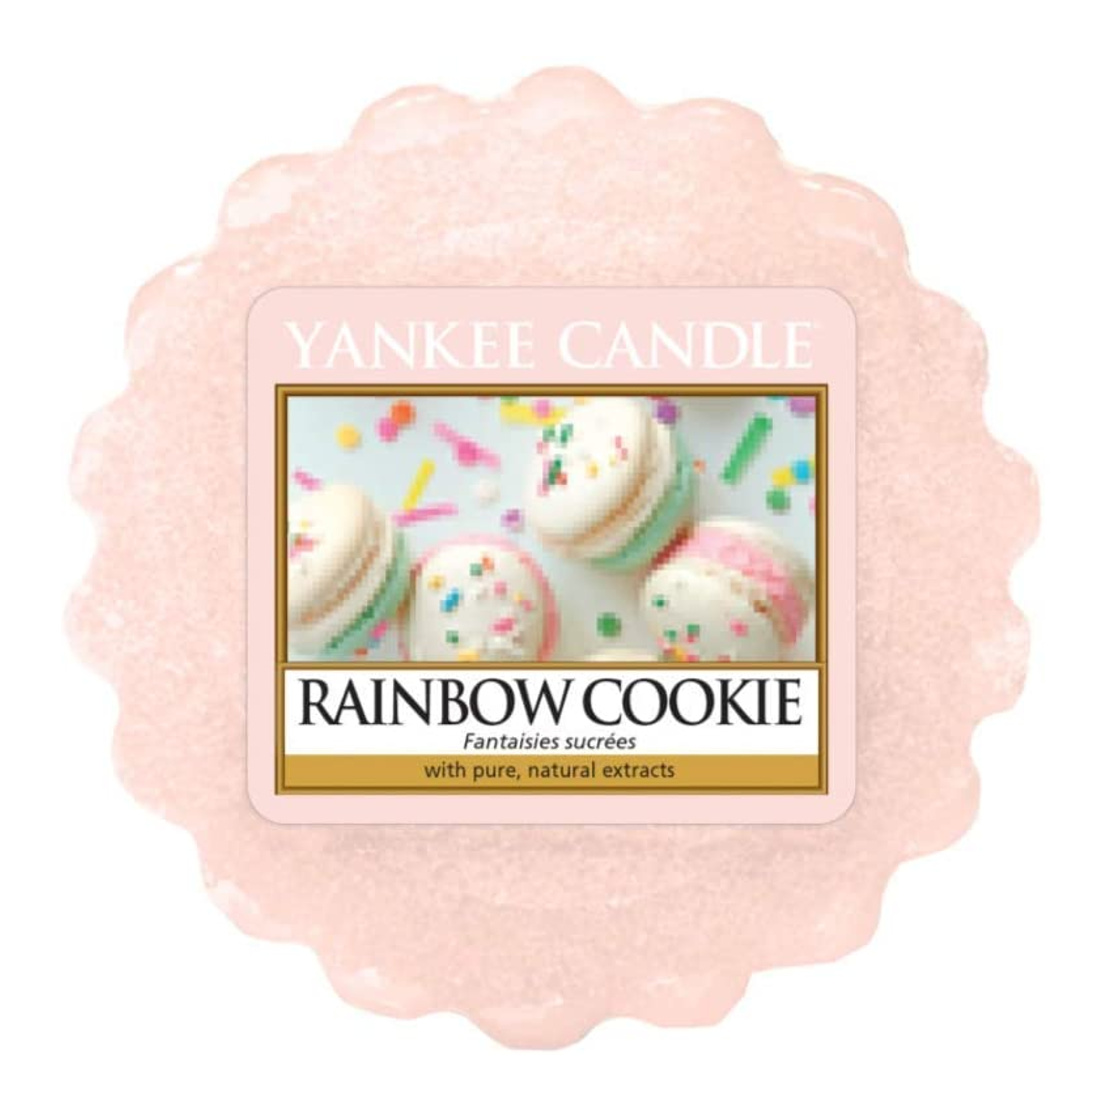 Yankee Candle Rainbow Cookie Wax Melt Tart